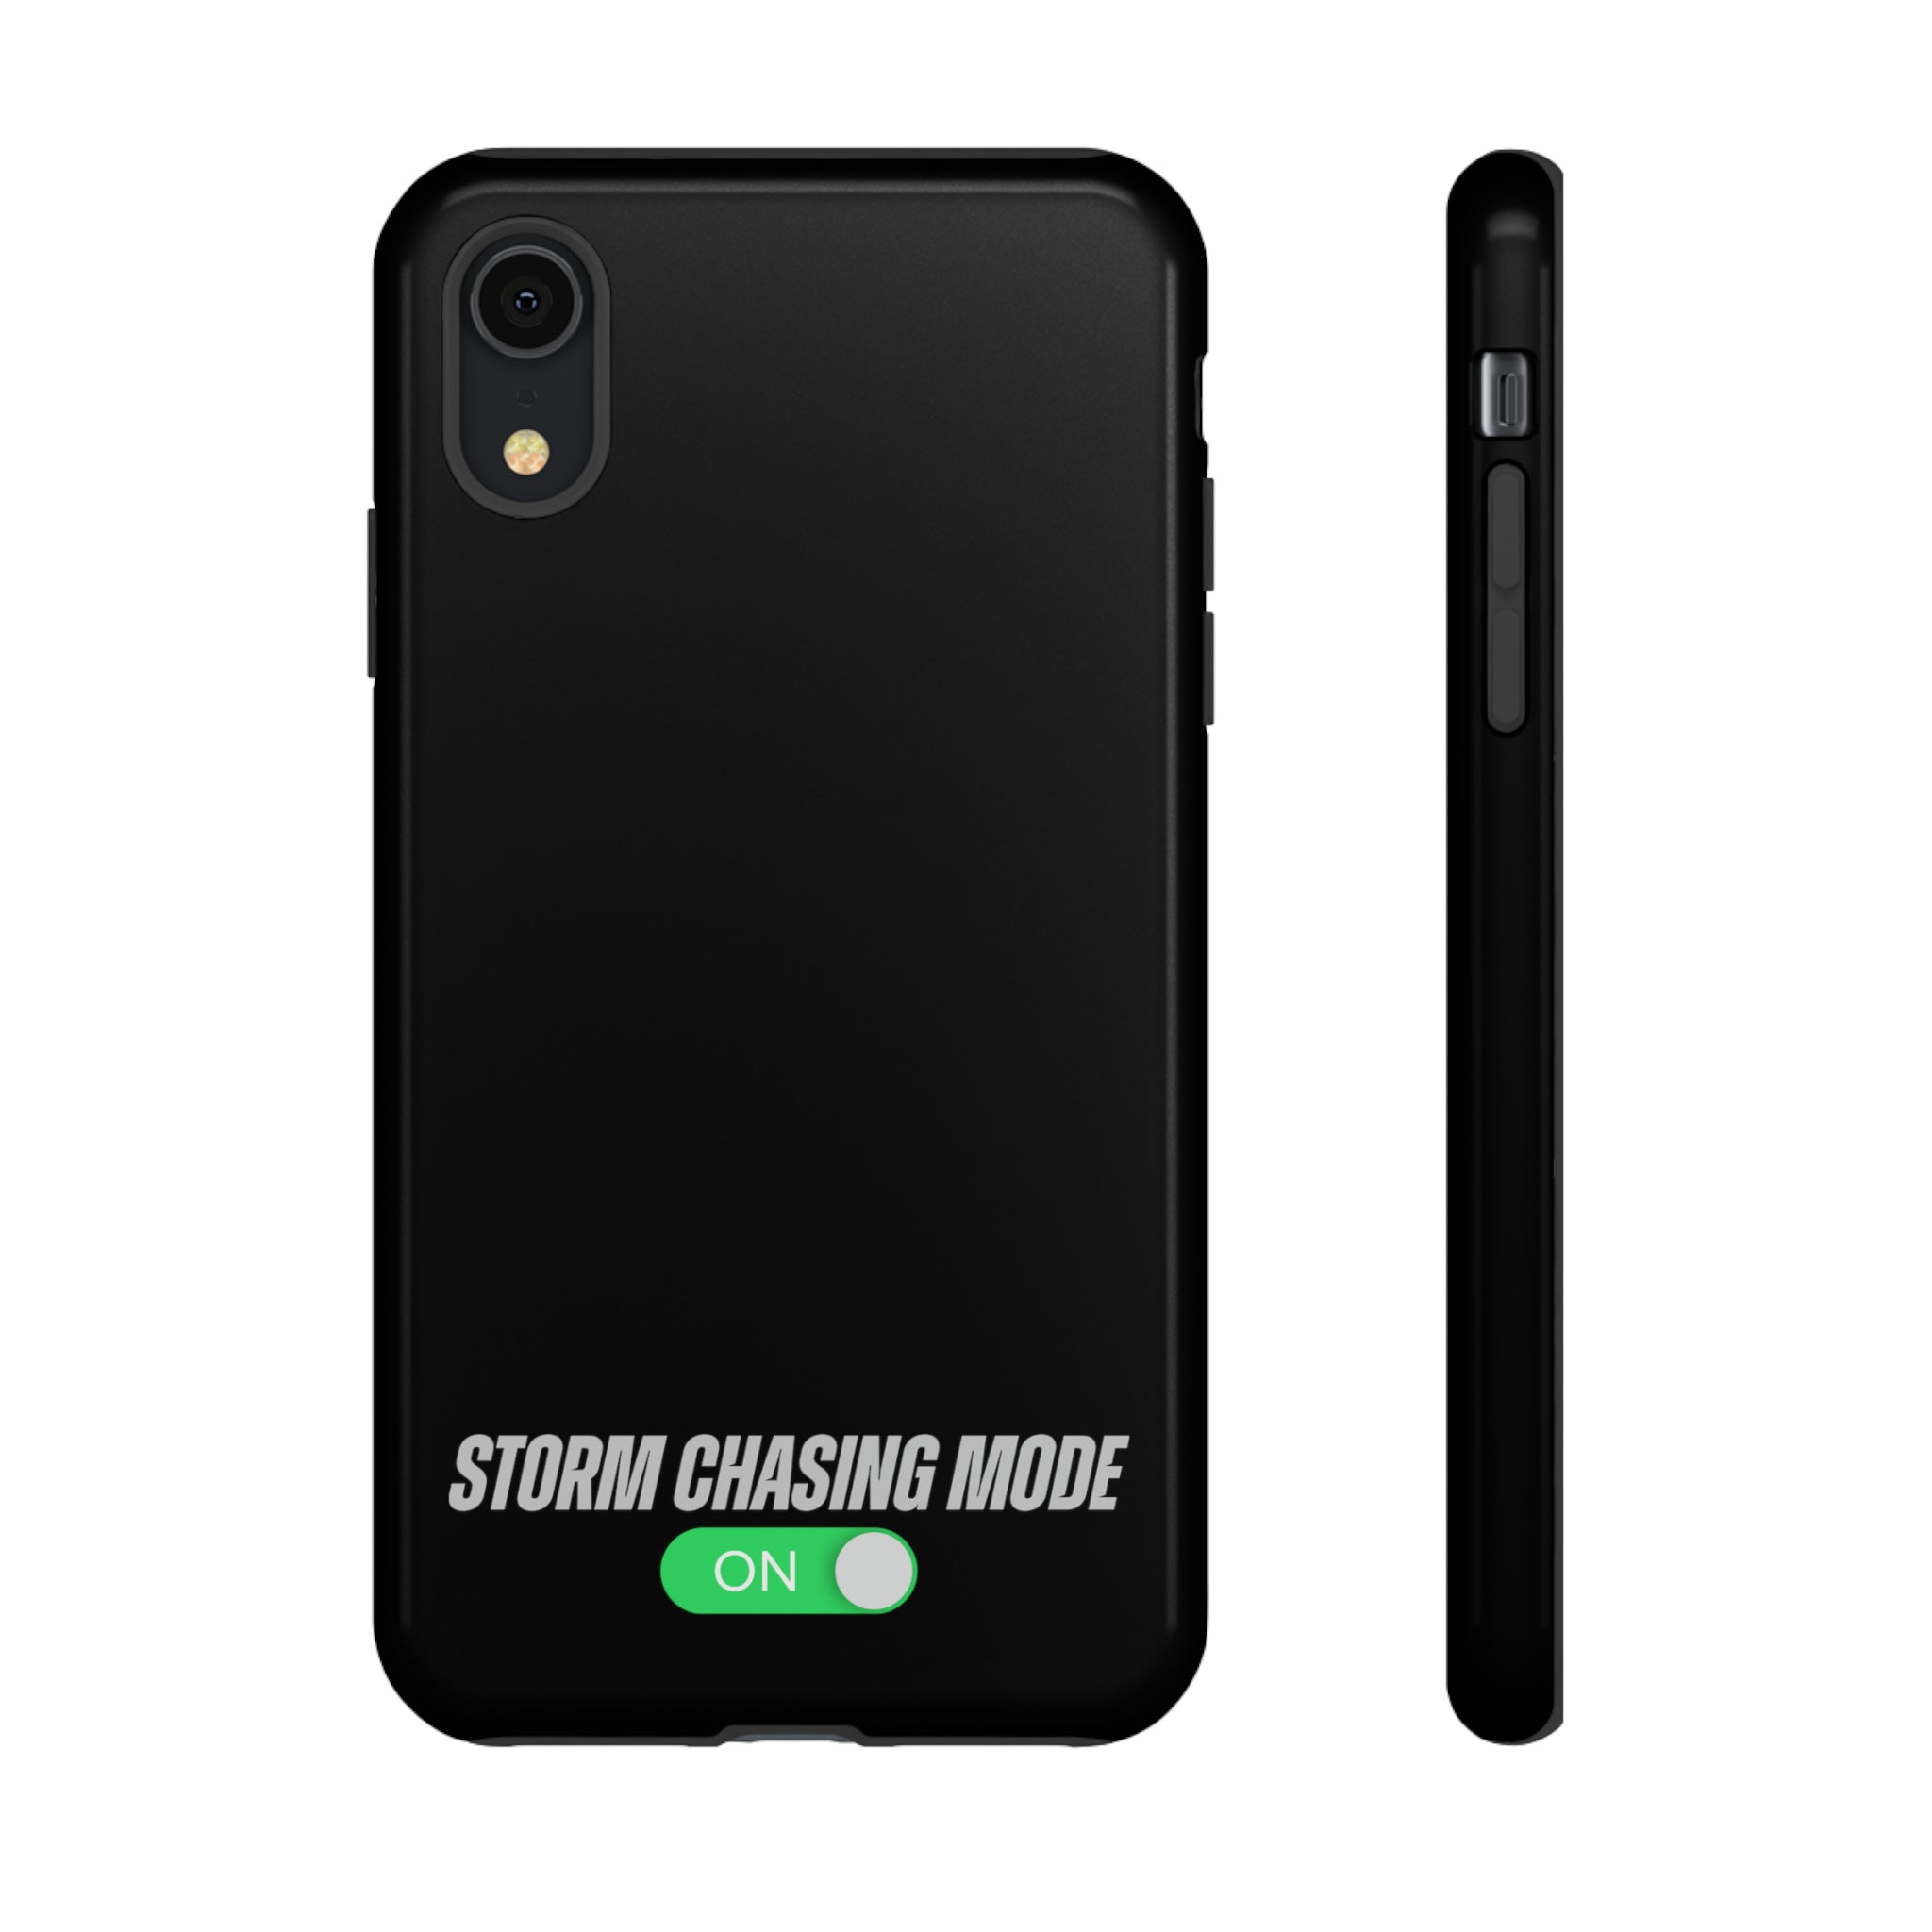 Modo Storm Chasing: ON Estuche resistente para teléfono 